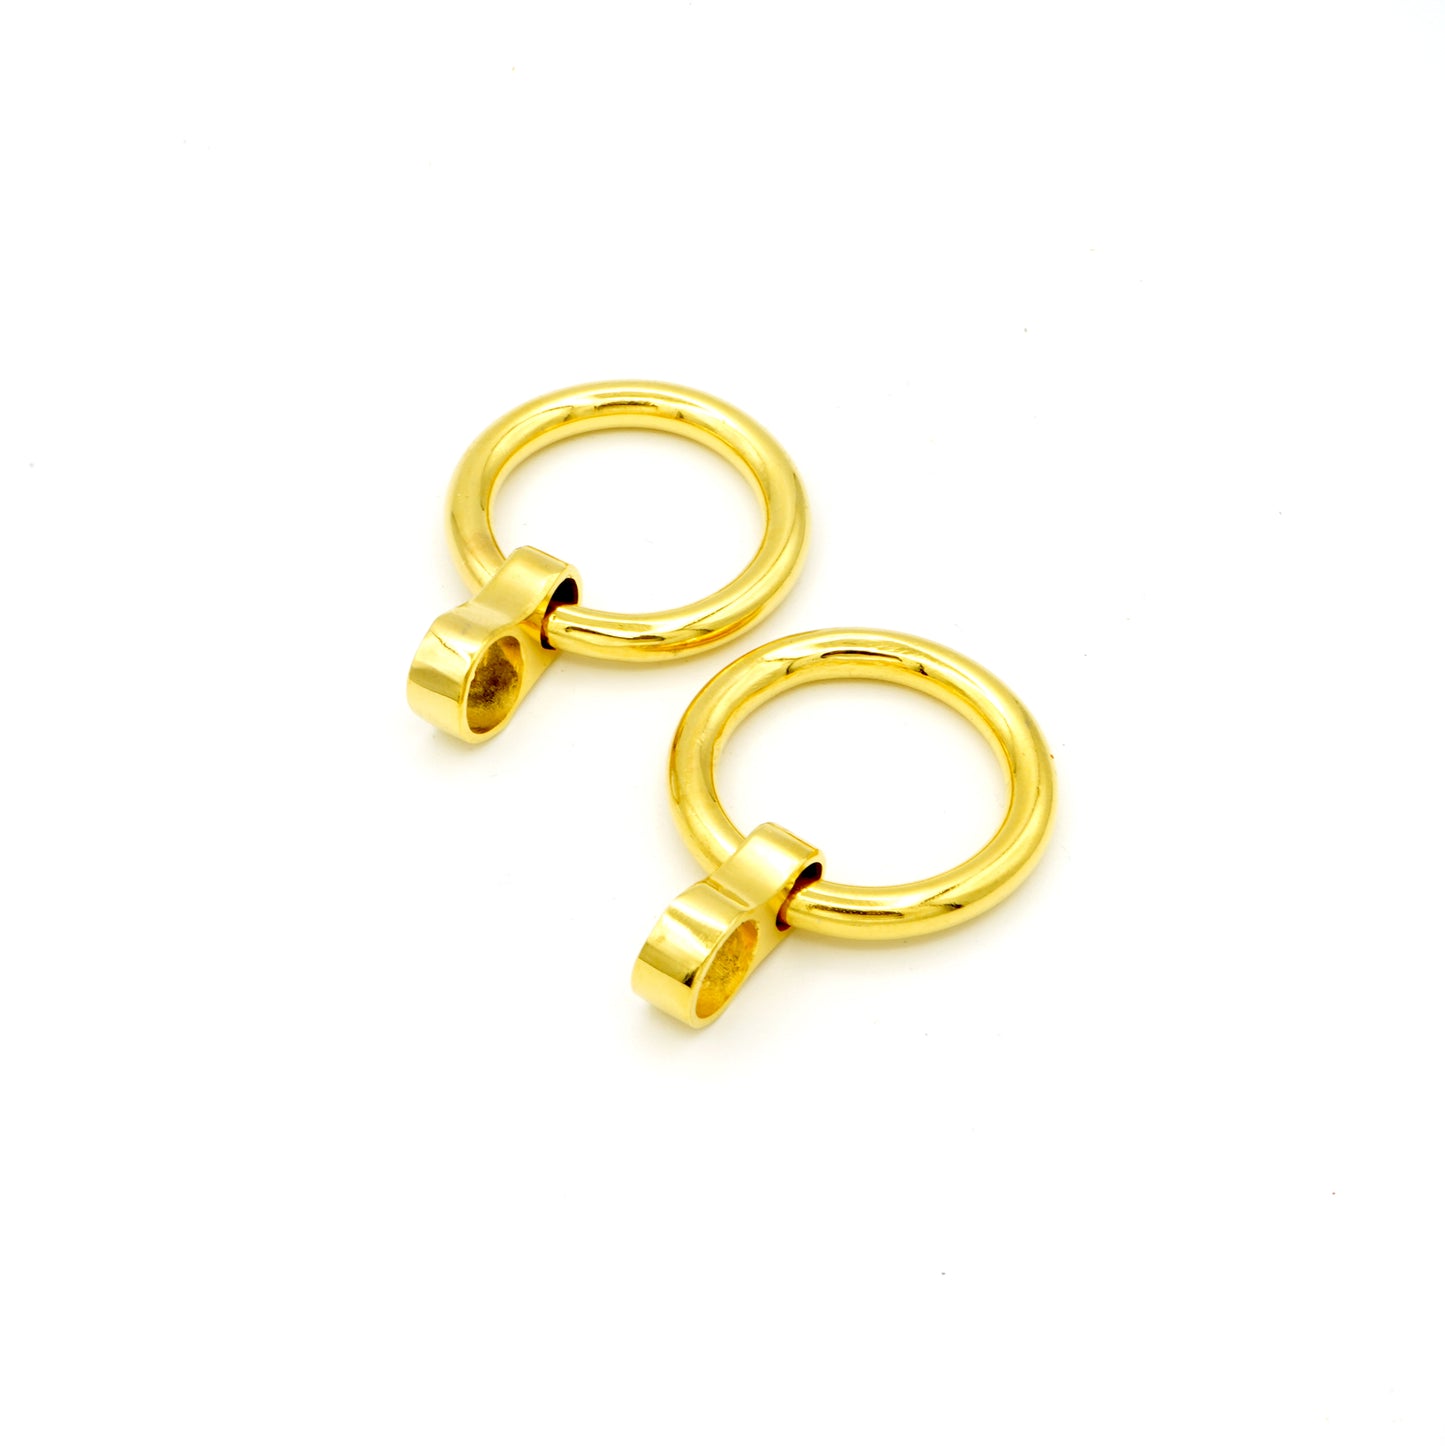 Thin locking jewelry bangles with key